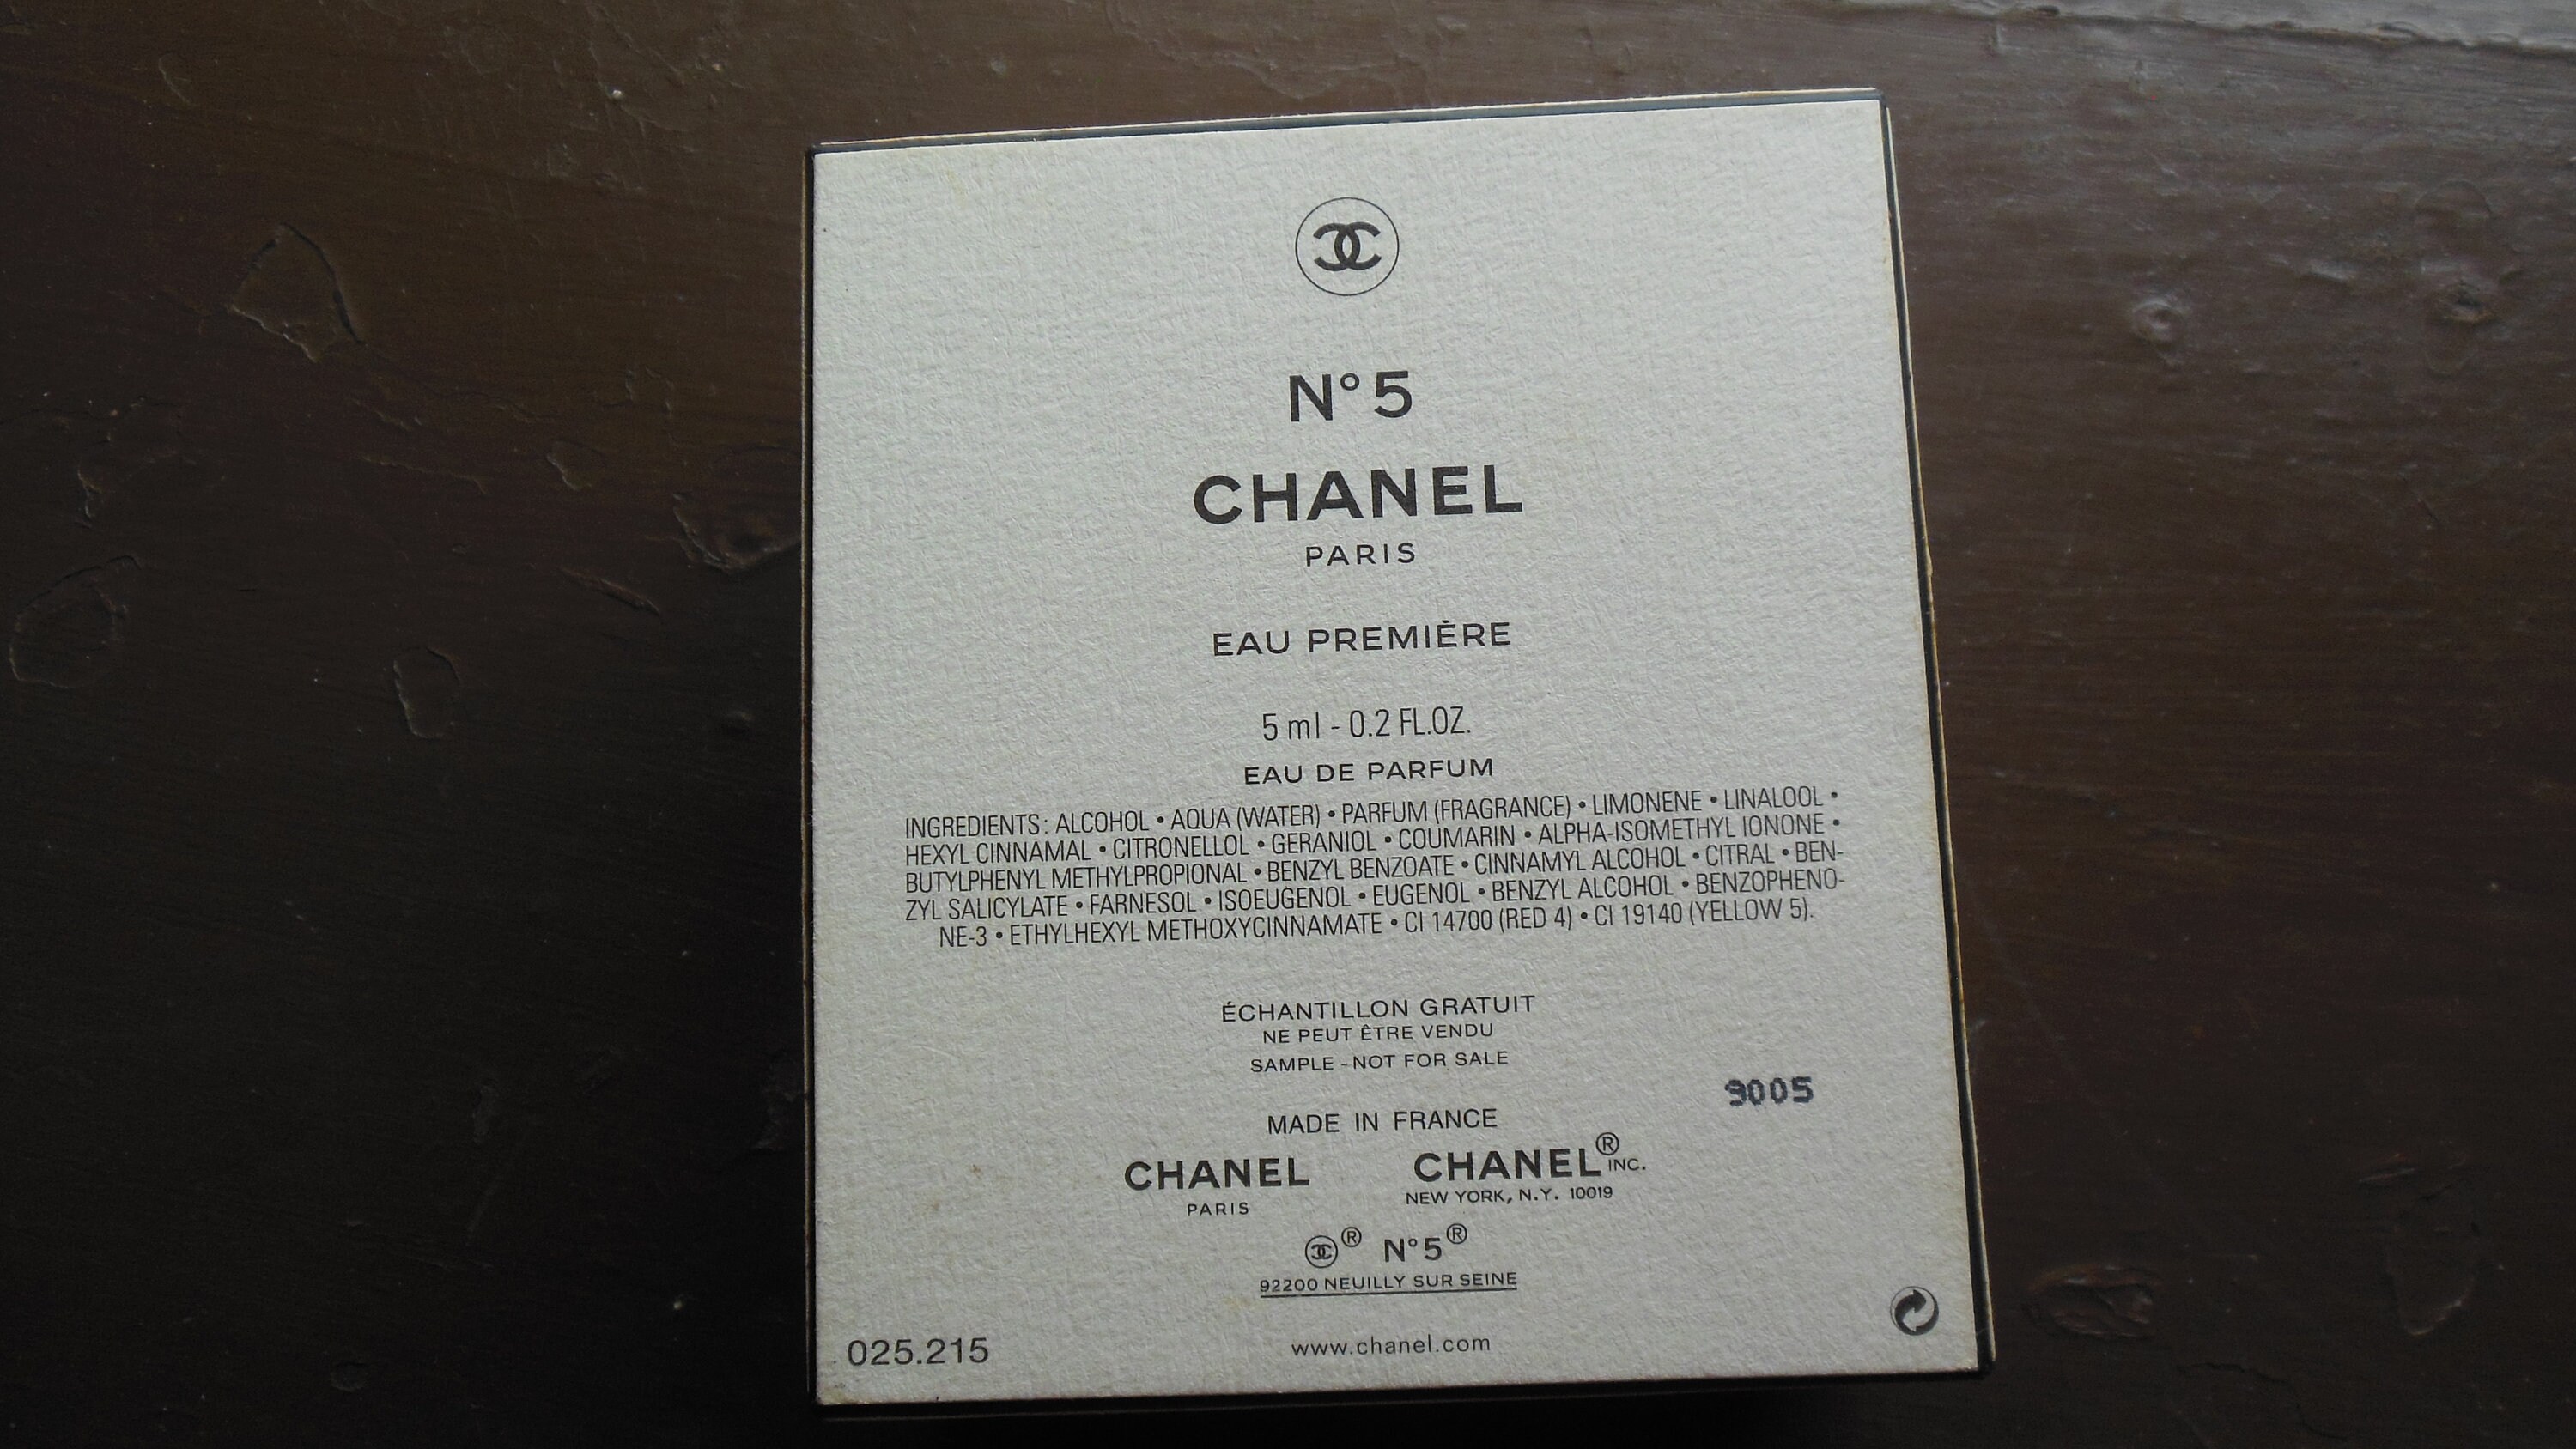 Chanel No 5 Eau Premiere Runway Box With Perfume Bottle 